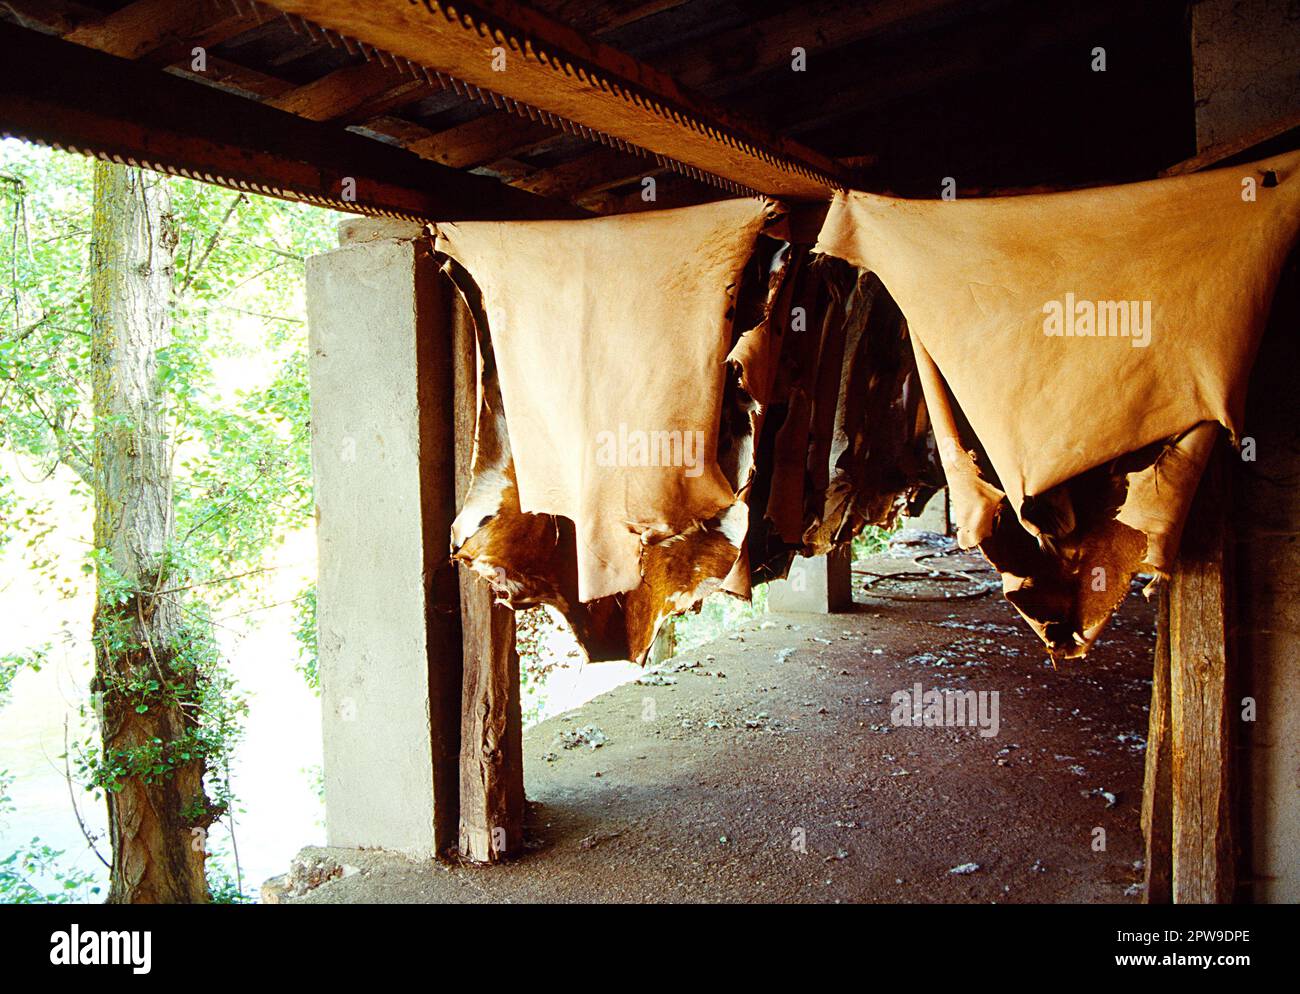 Tanning leather. Covarrubias, Burgos province, Castilla Leon, Spain. Stock Photo